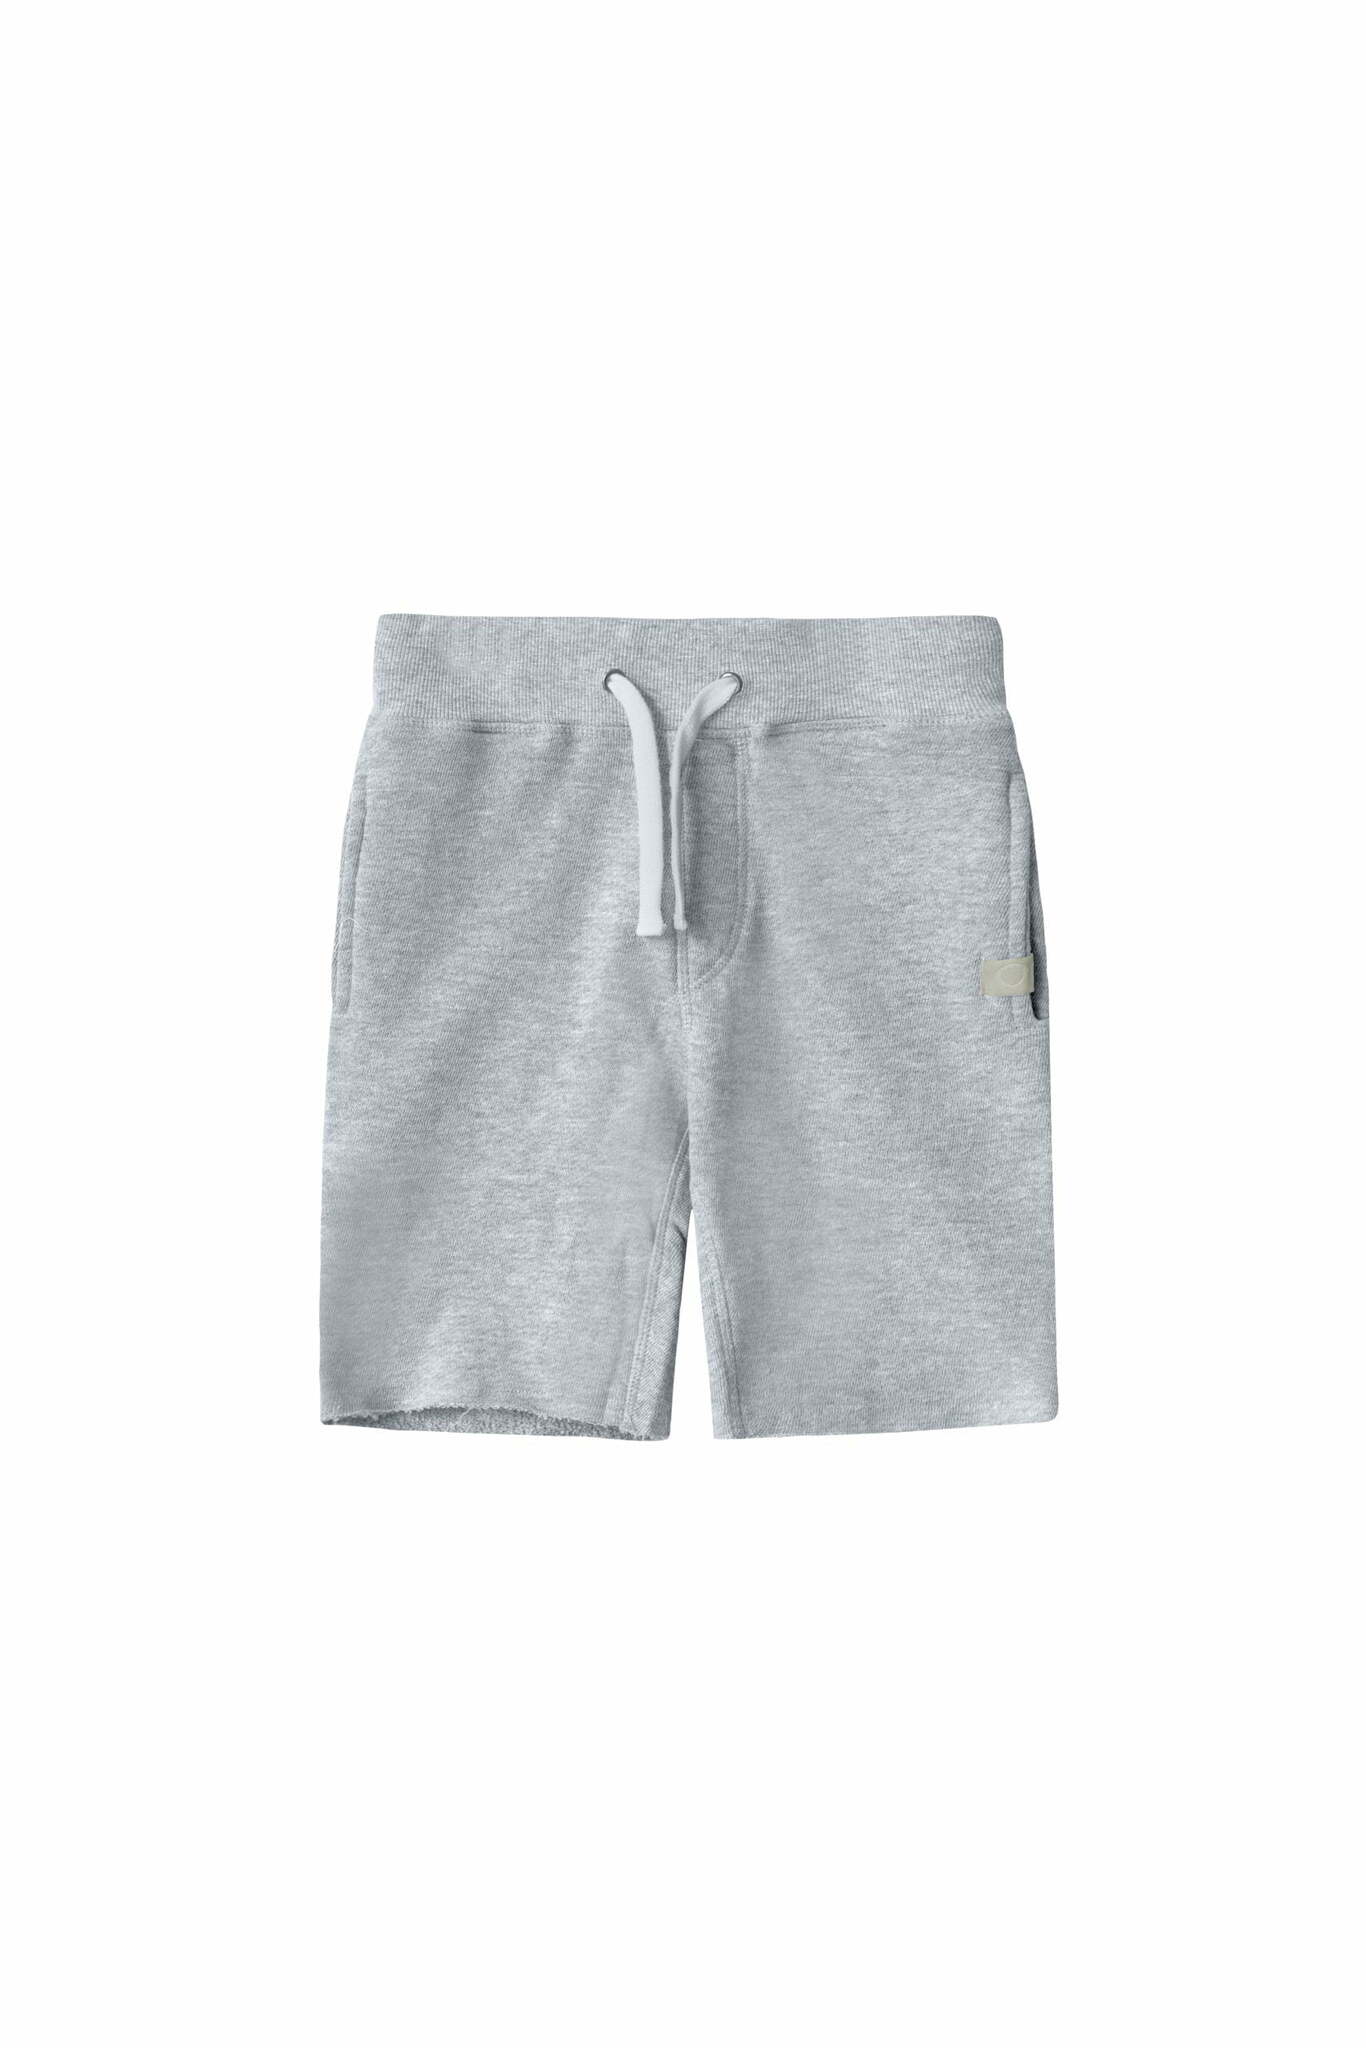 Robin shorts grey melange - Stl.86/92 -